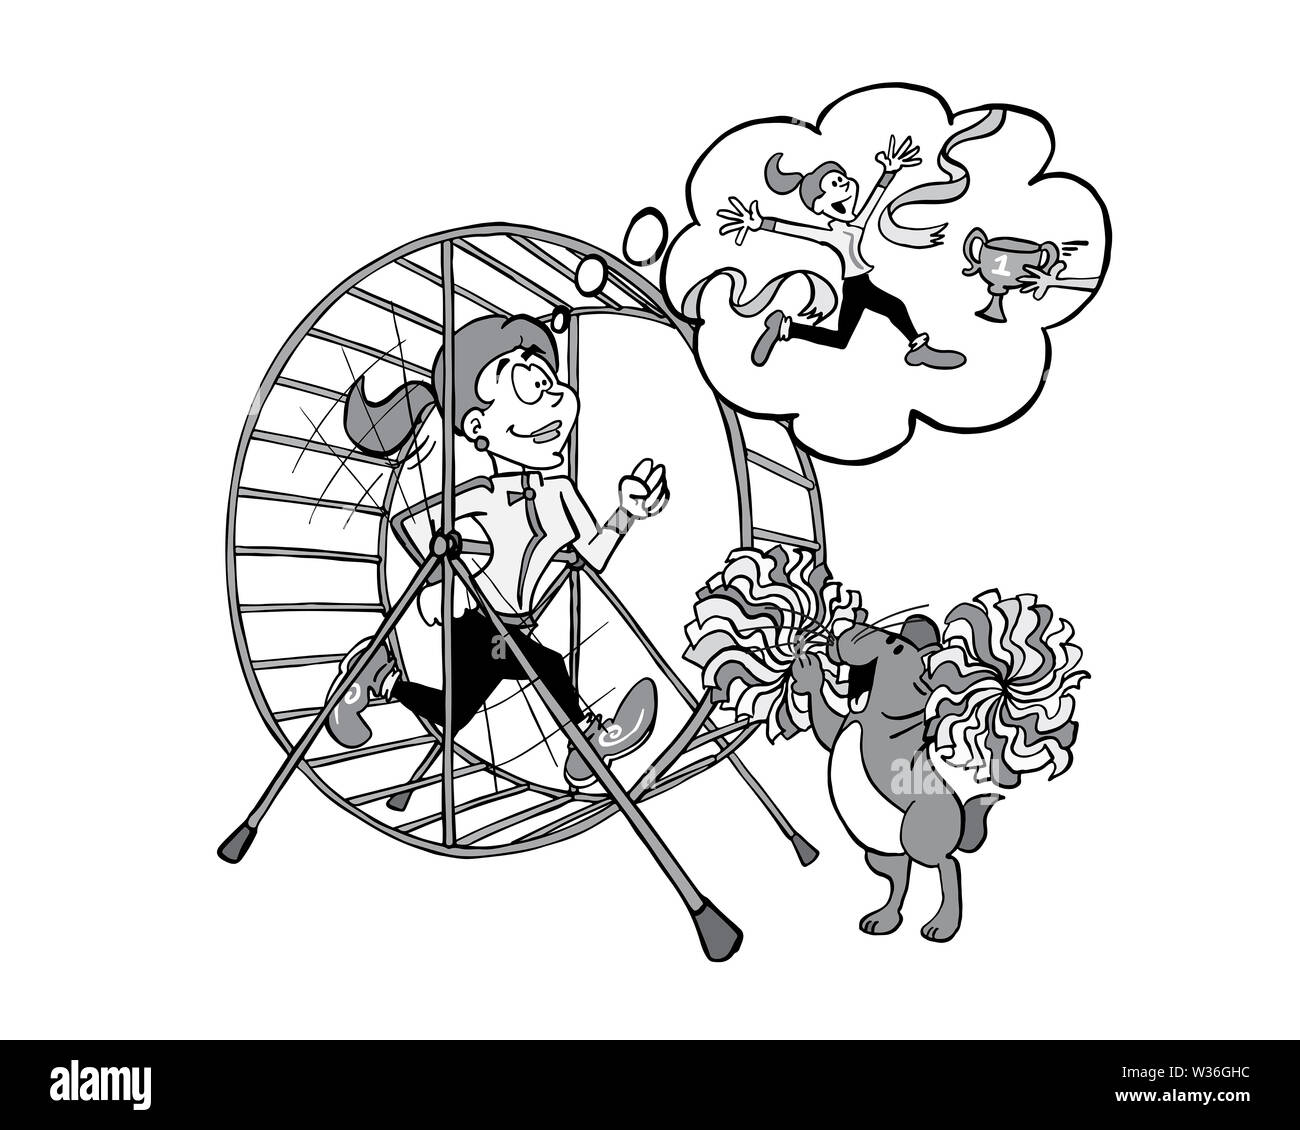 Woman training inside a hamster wheel Stock Photo